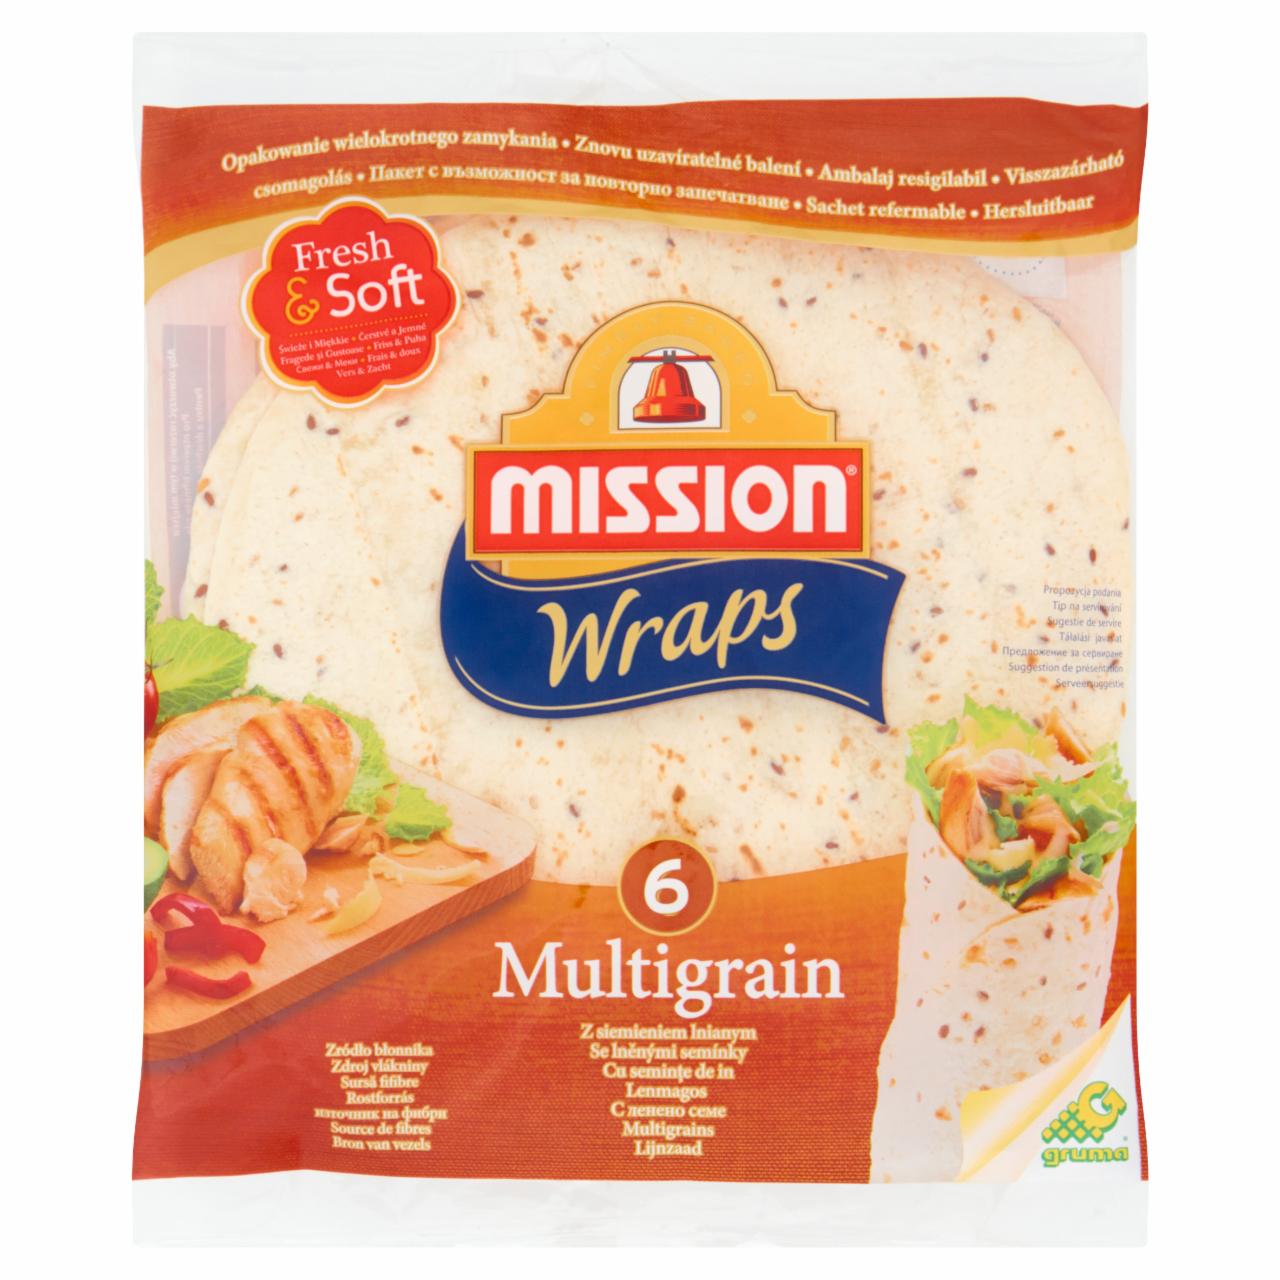 Képek - Wraps multigrain wheat flour tortilla with linseed Mission